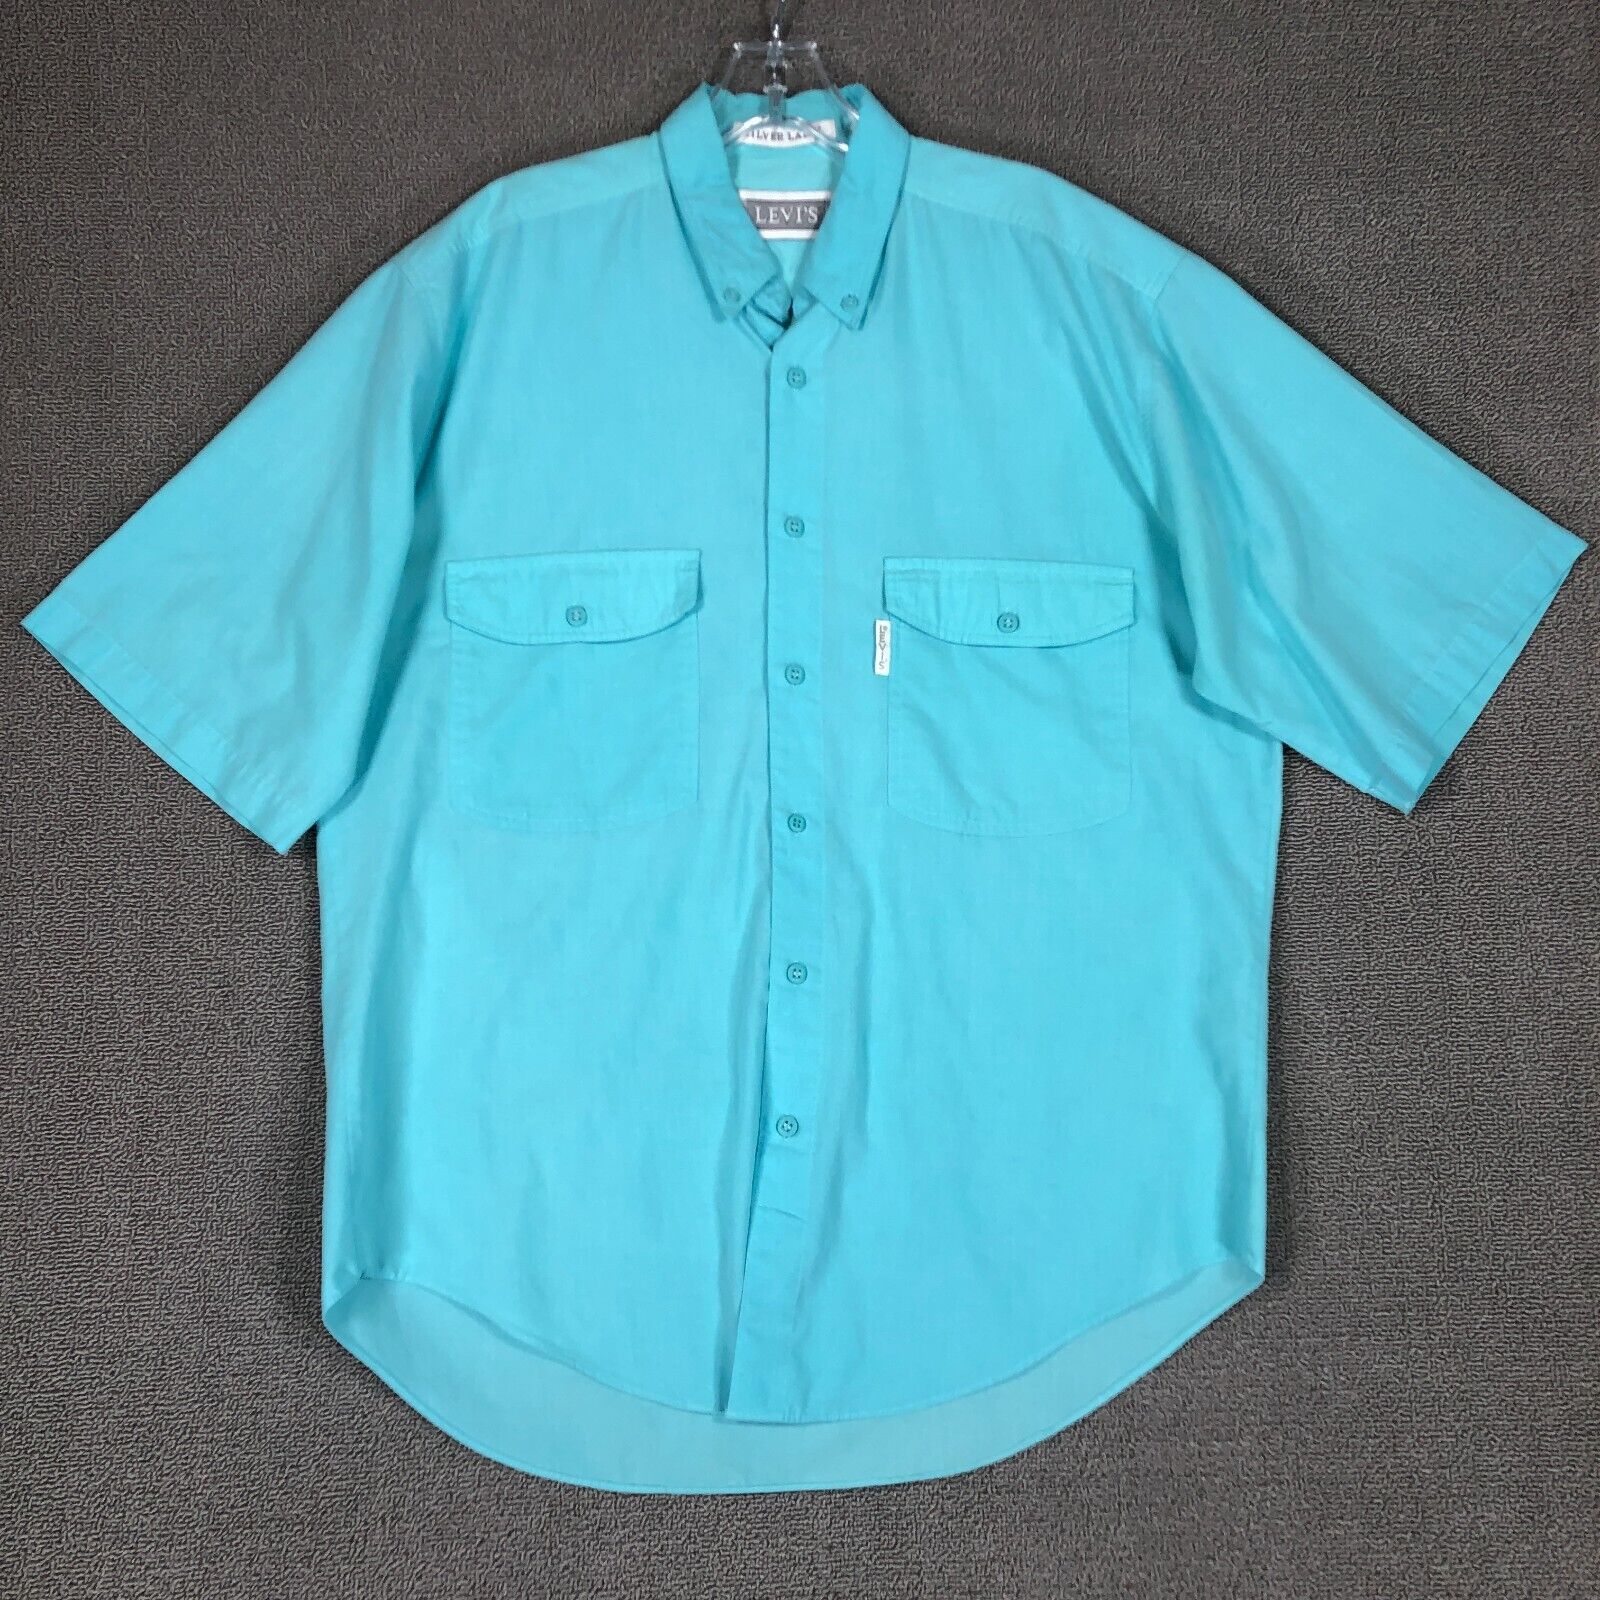 Vintage Levis Shirt Mens Medium Silver Label Blue Button Up Western Cowboy Adult